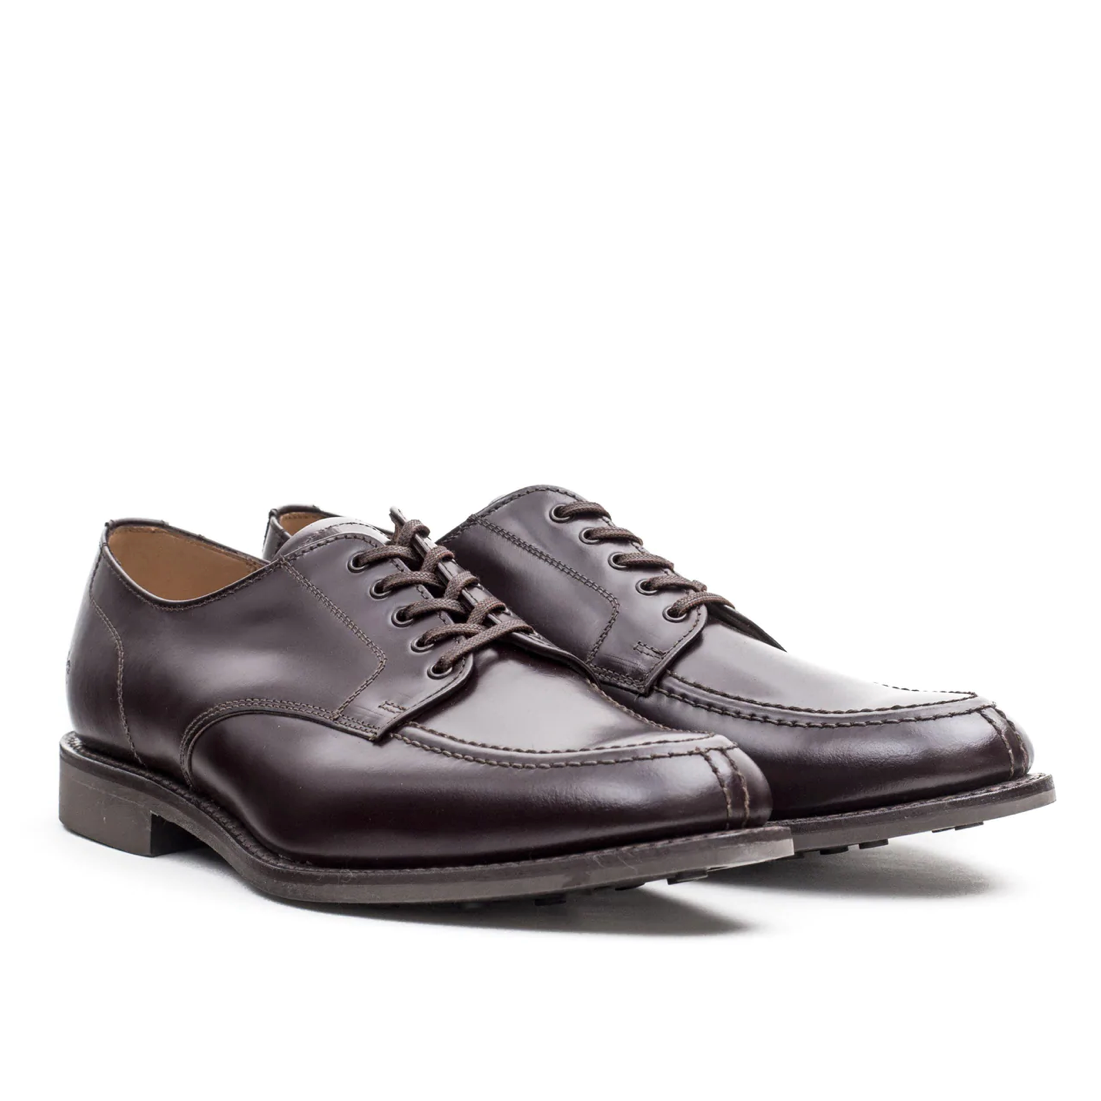 1130R Military Derby Shoe - Burgundy Leather